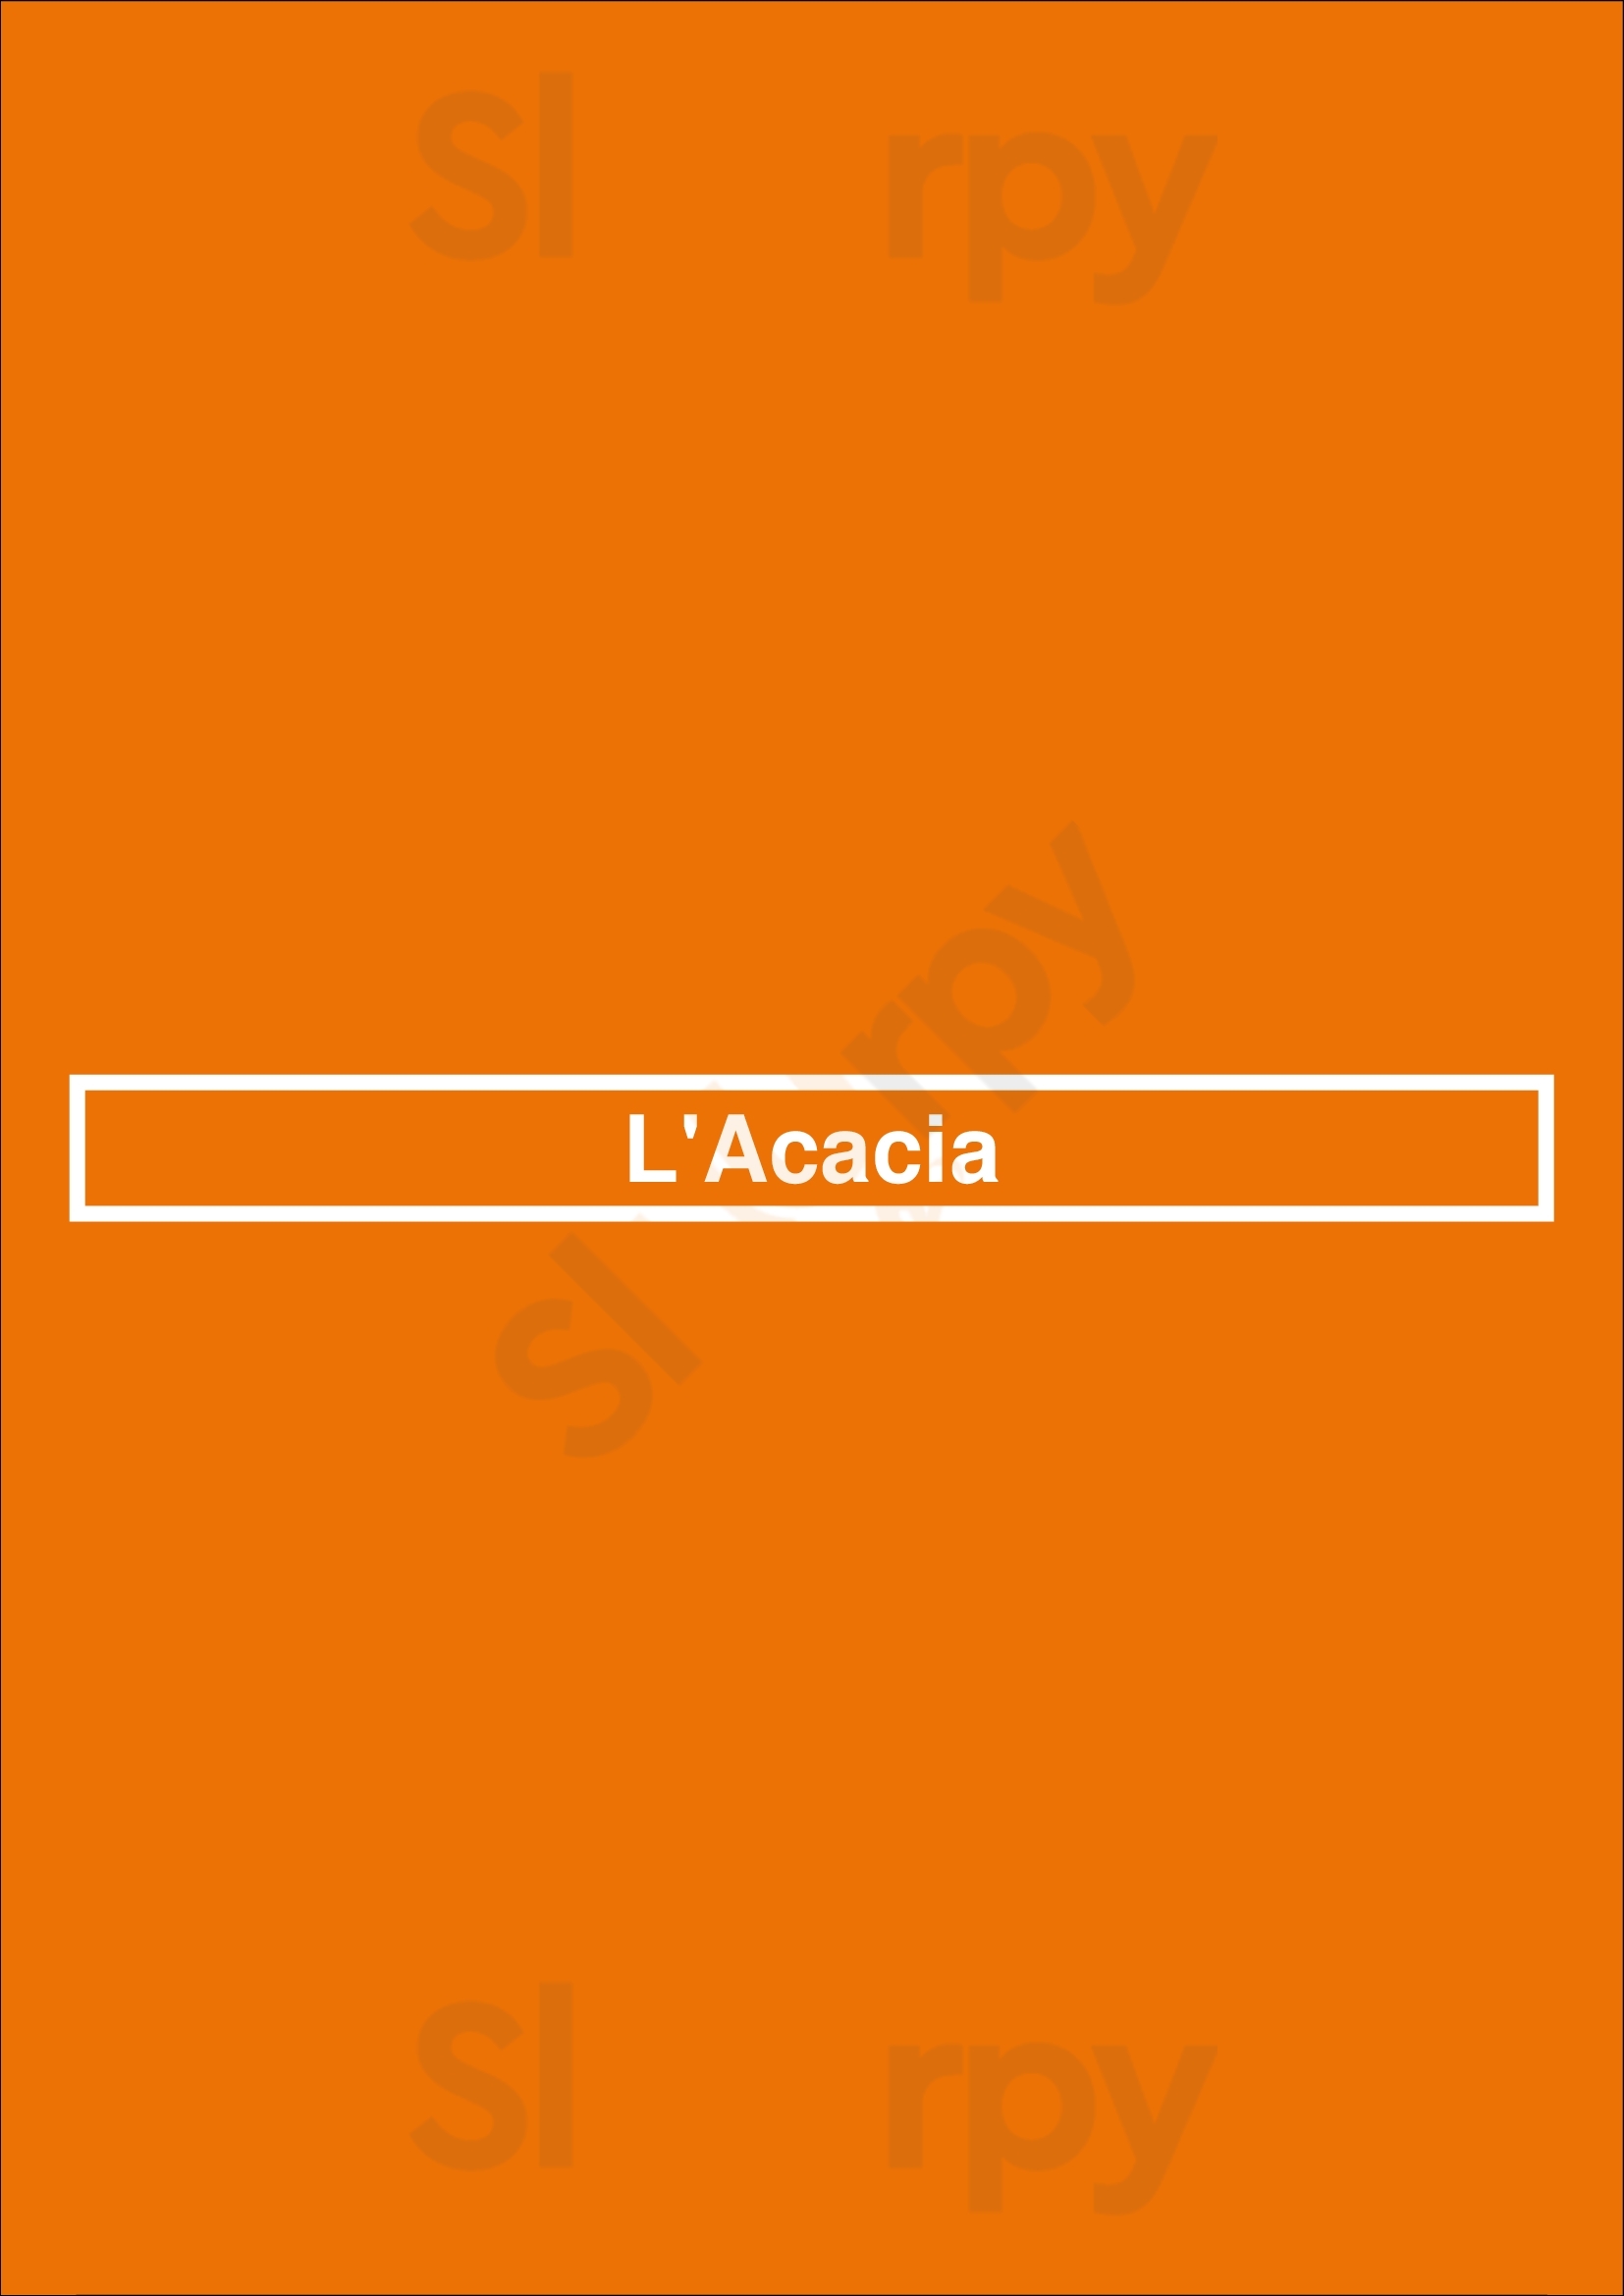 L'acacia Lyon Menu - 1